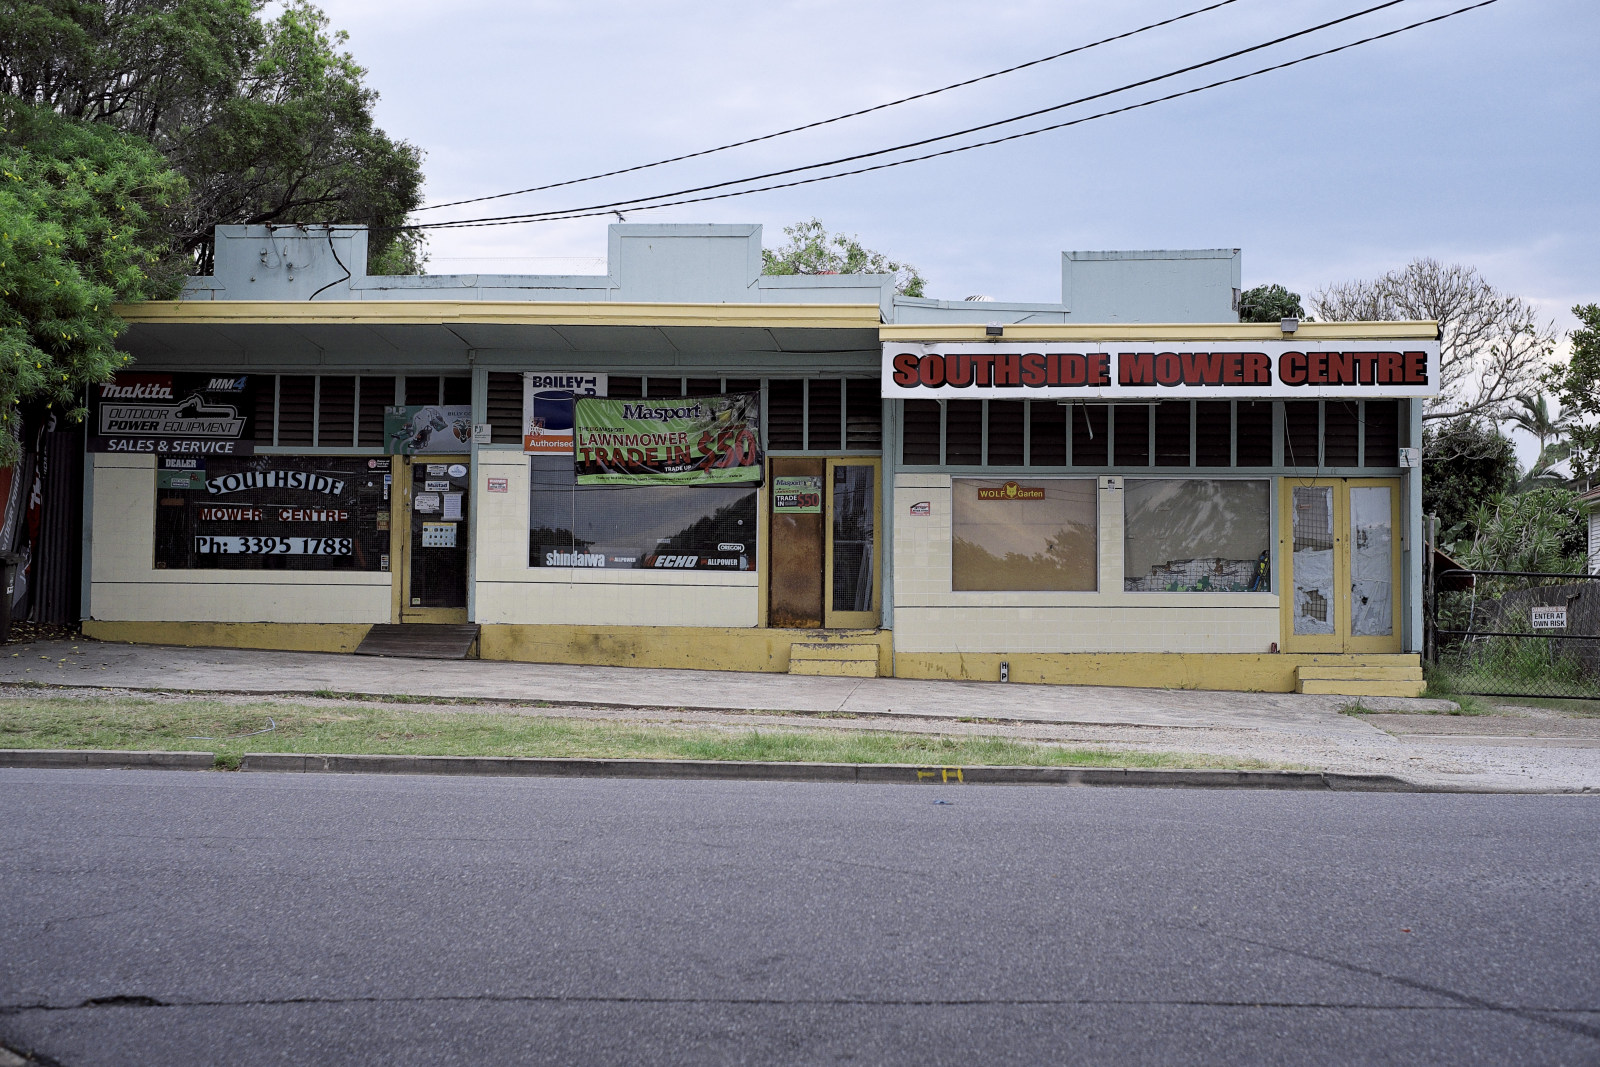 Southside Mower Center - Formaer Butchers shop and general store, Nurstead Street Carina. Post WW2 Brisbane vernacular architecture.